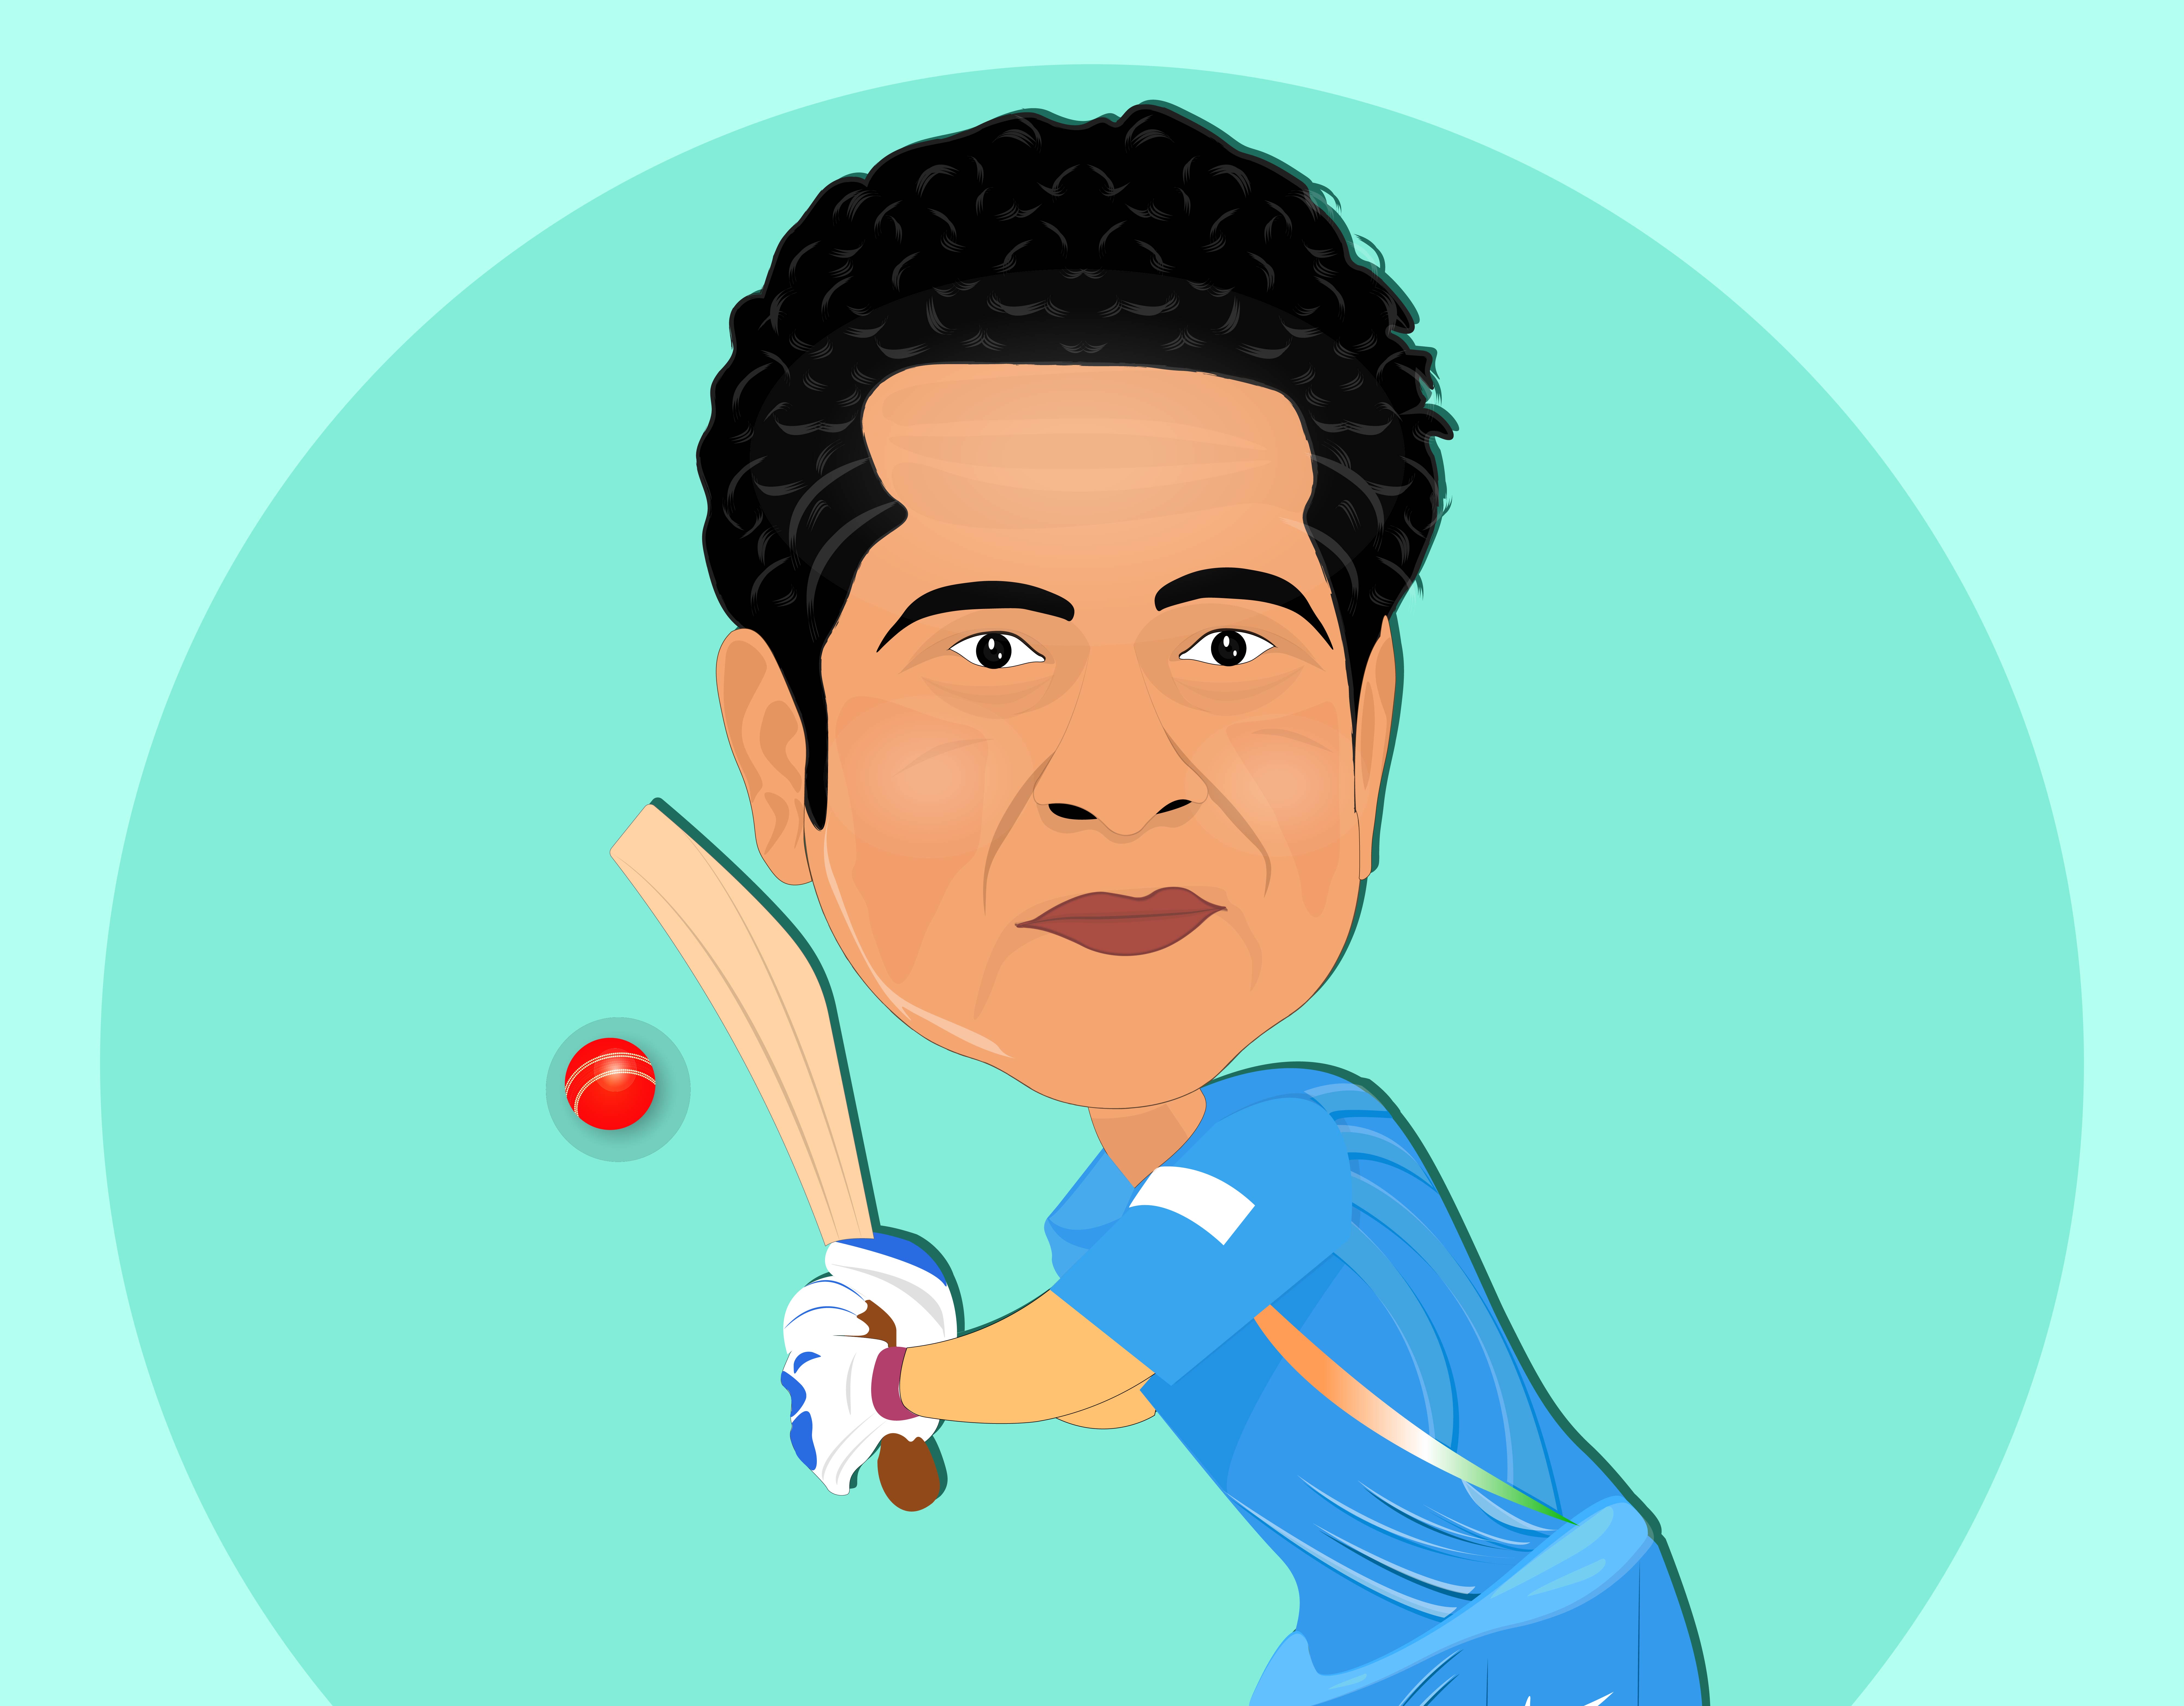 Sachin Tendulkar, Indian former international cricketer, cartoon vector illustration.